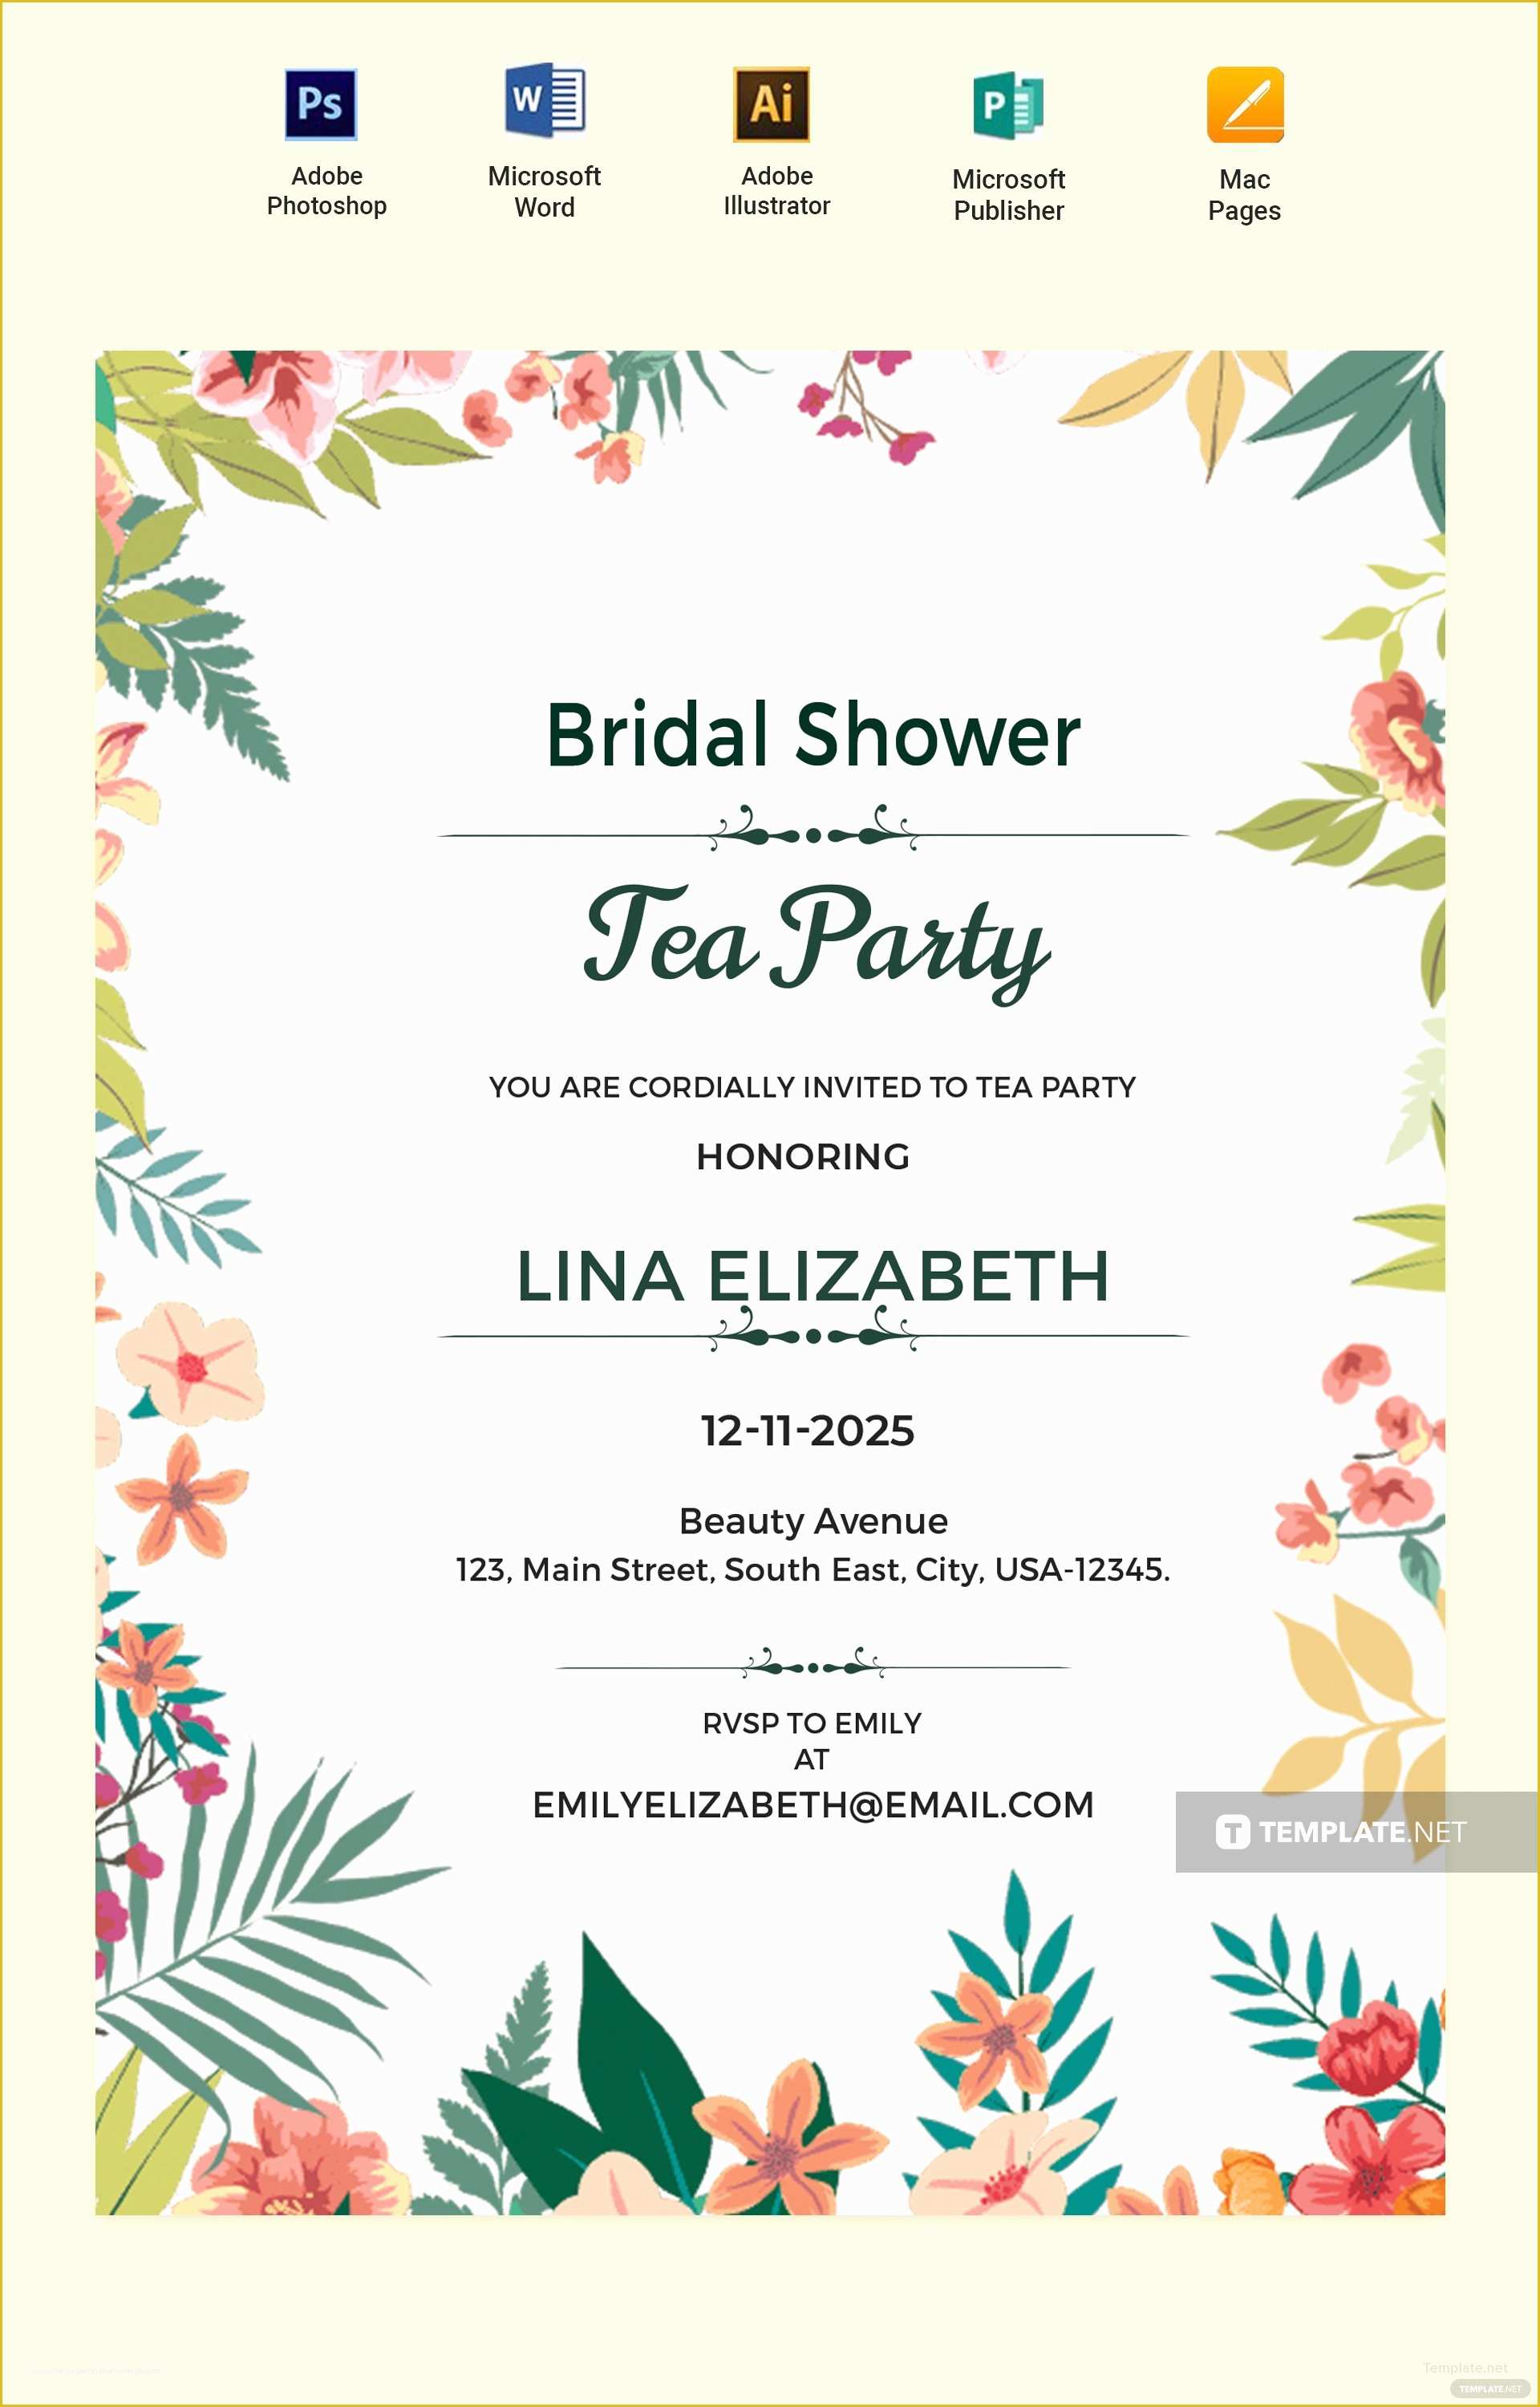 Free Bridal Shower Invitation Templates Photoshop Of Floral Bridal Shower Invitation Card Design 